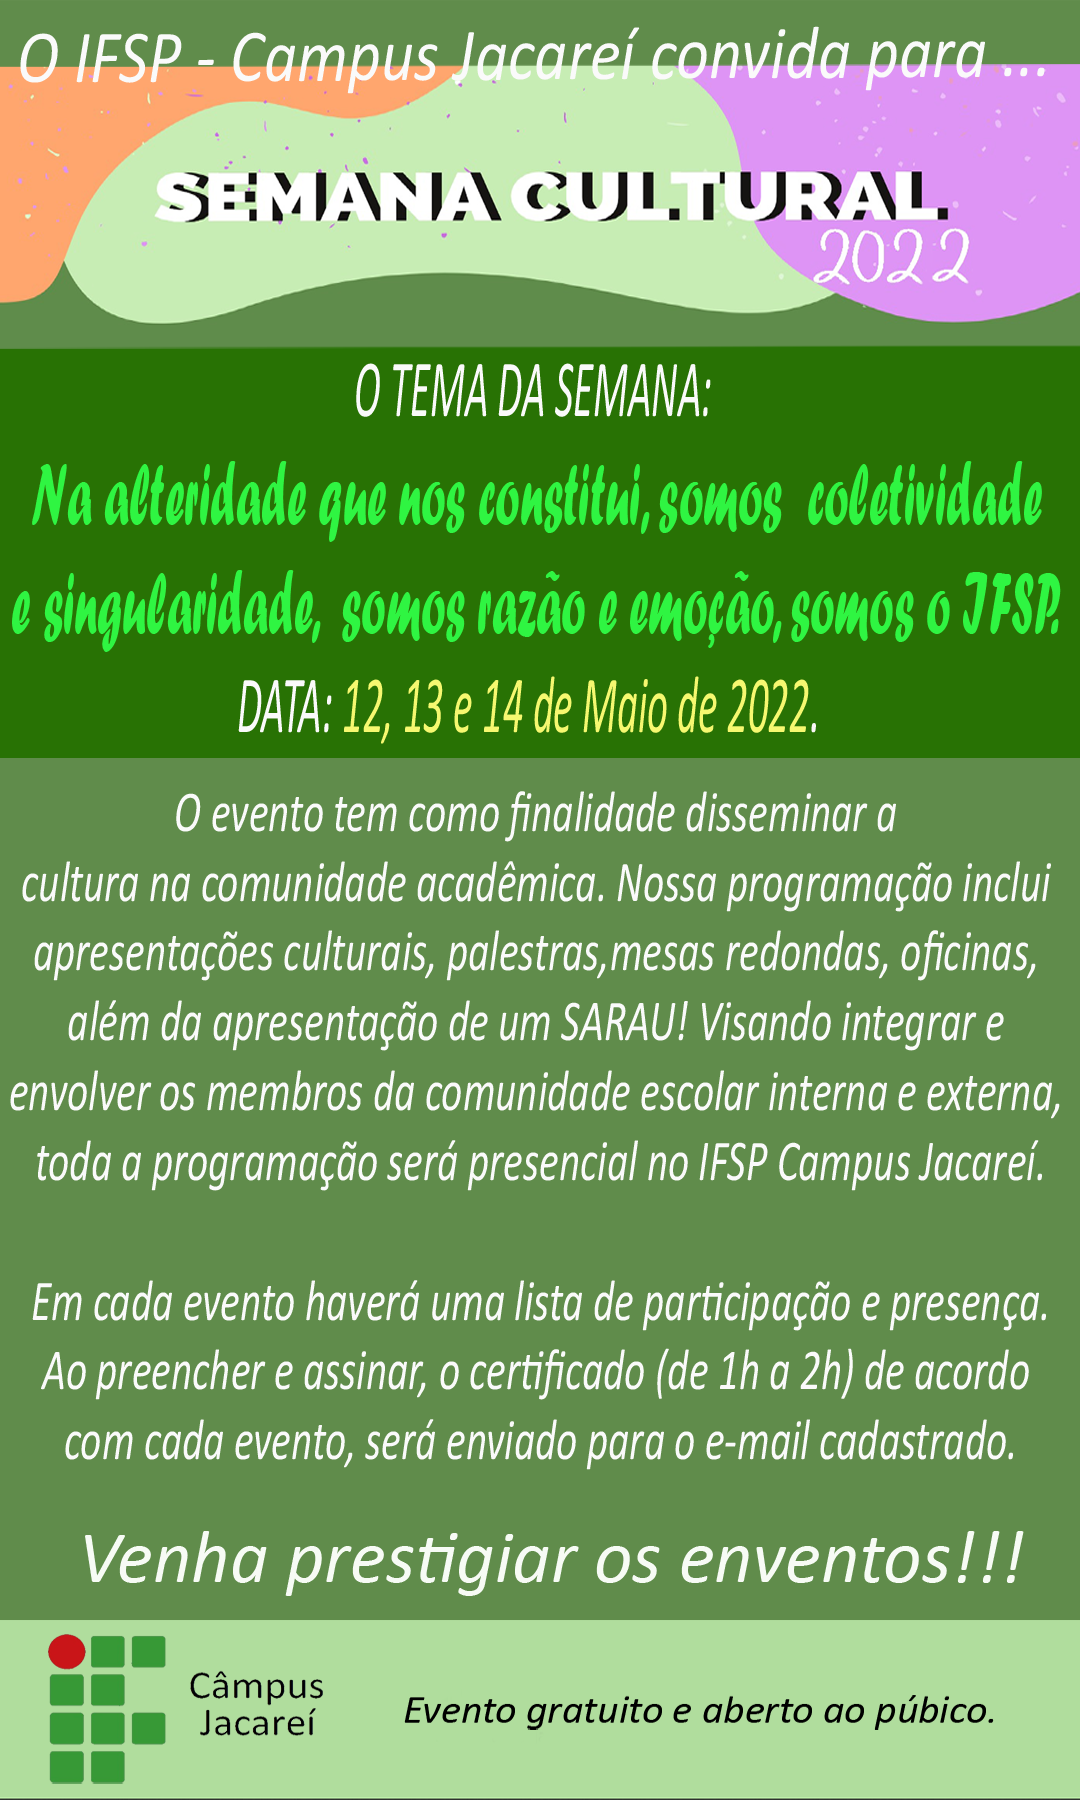 Foto de Semana Cultural IFSP-JCR 2022 - Inclusão (NAPNE IFSP JCR)